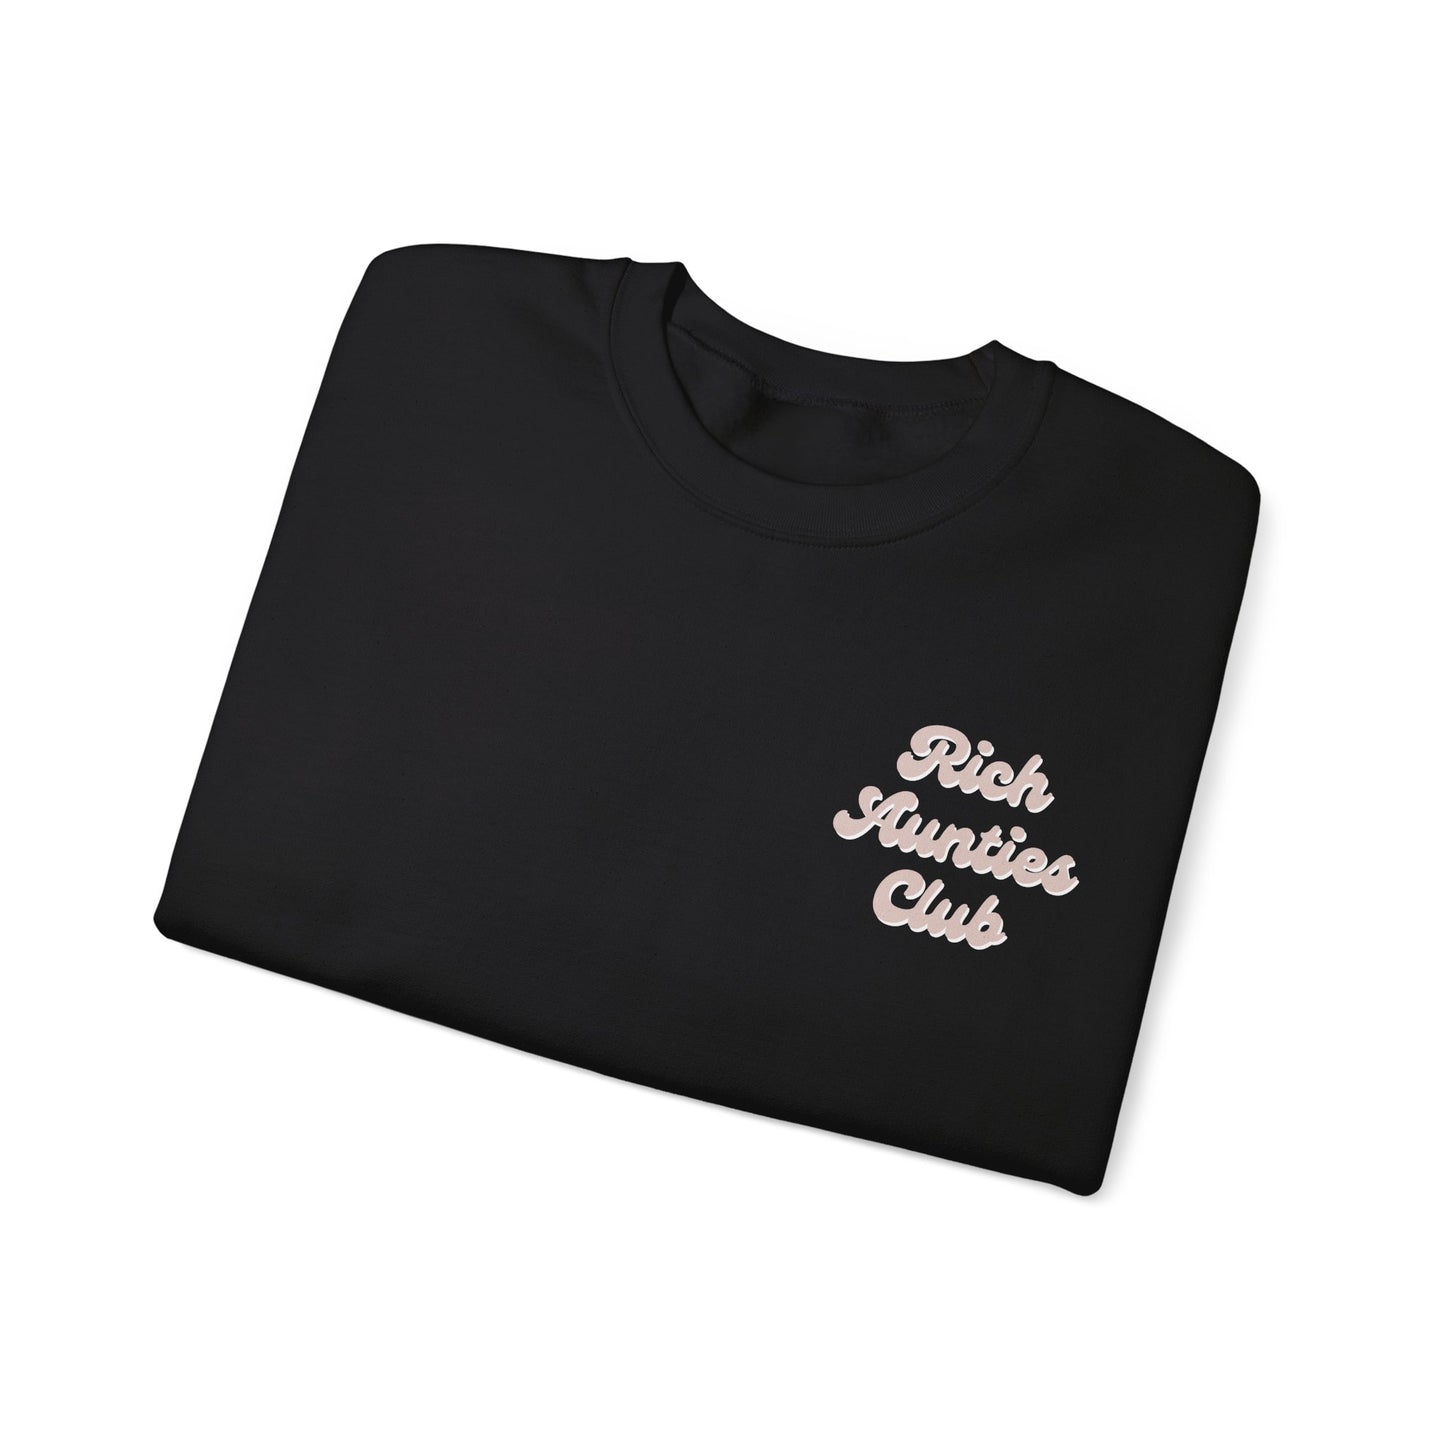 Rich Auntie Club Sweatshirt